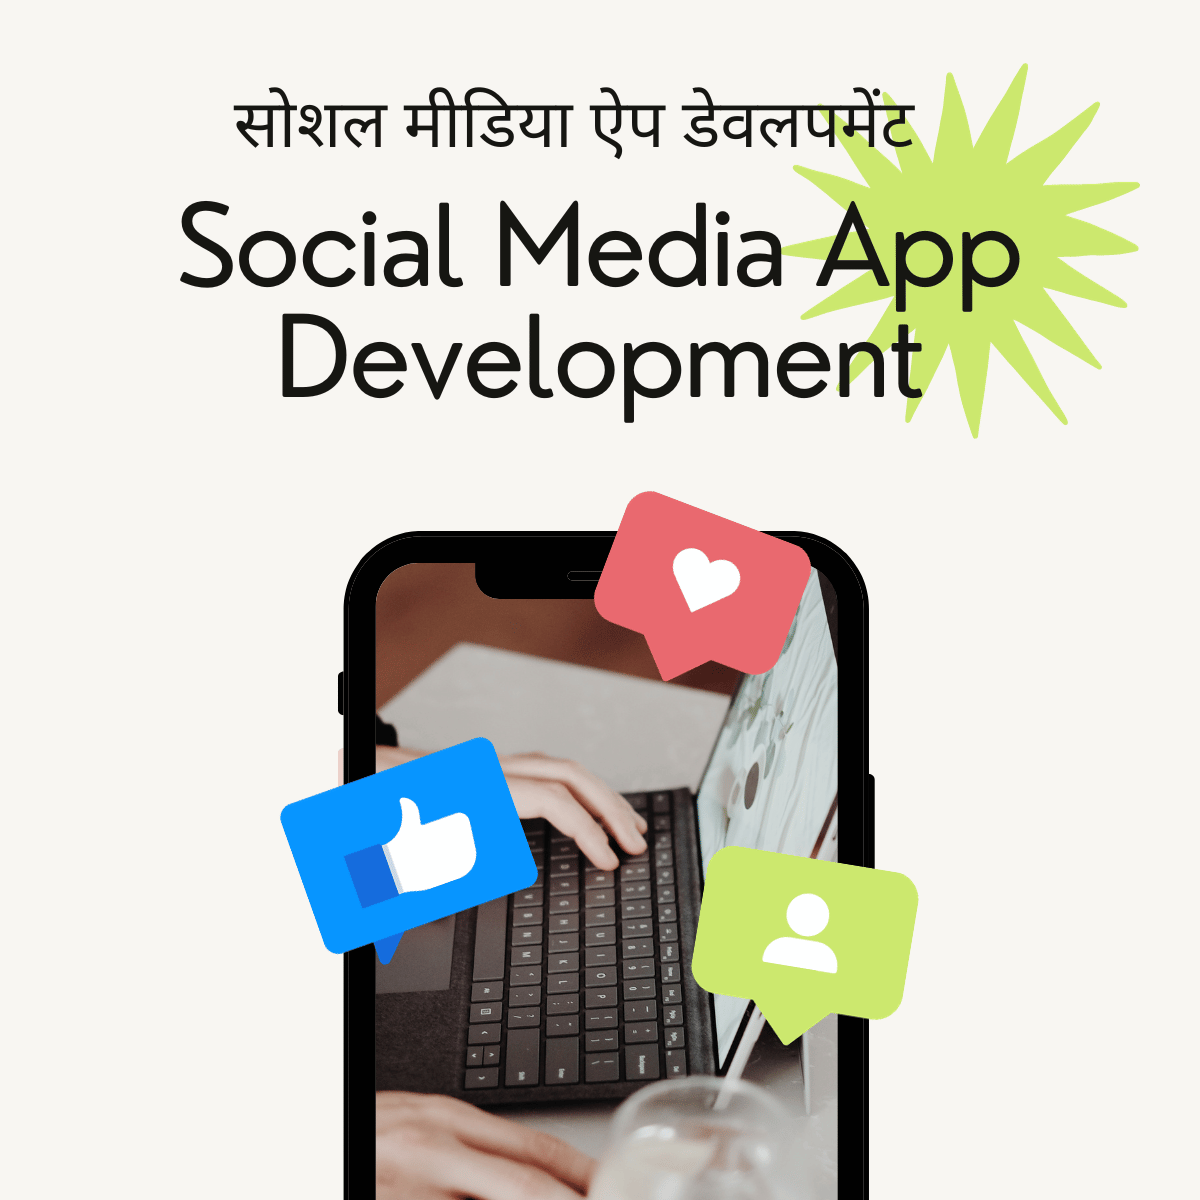 Social Media App Development सोशल मीडिया ऐप डेवलपमेंट